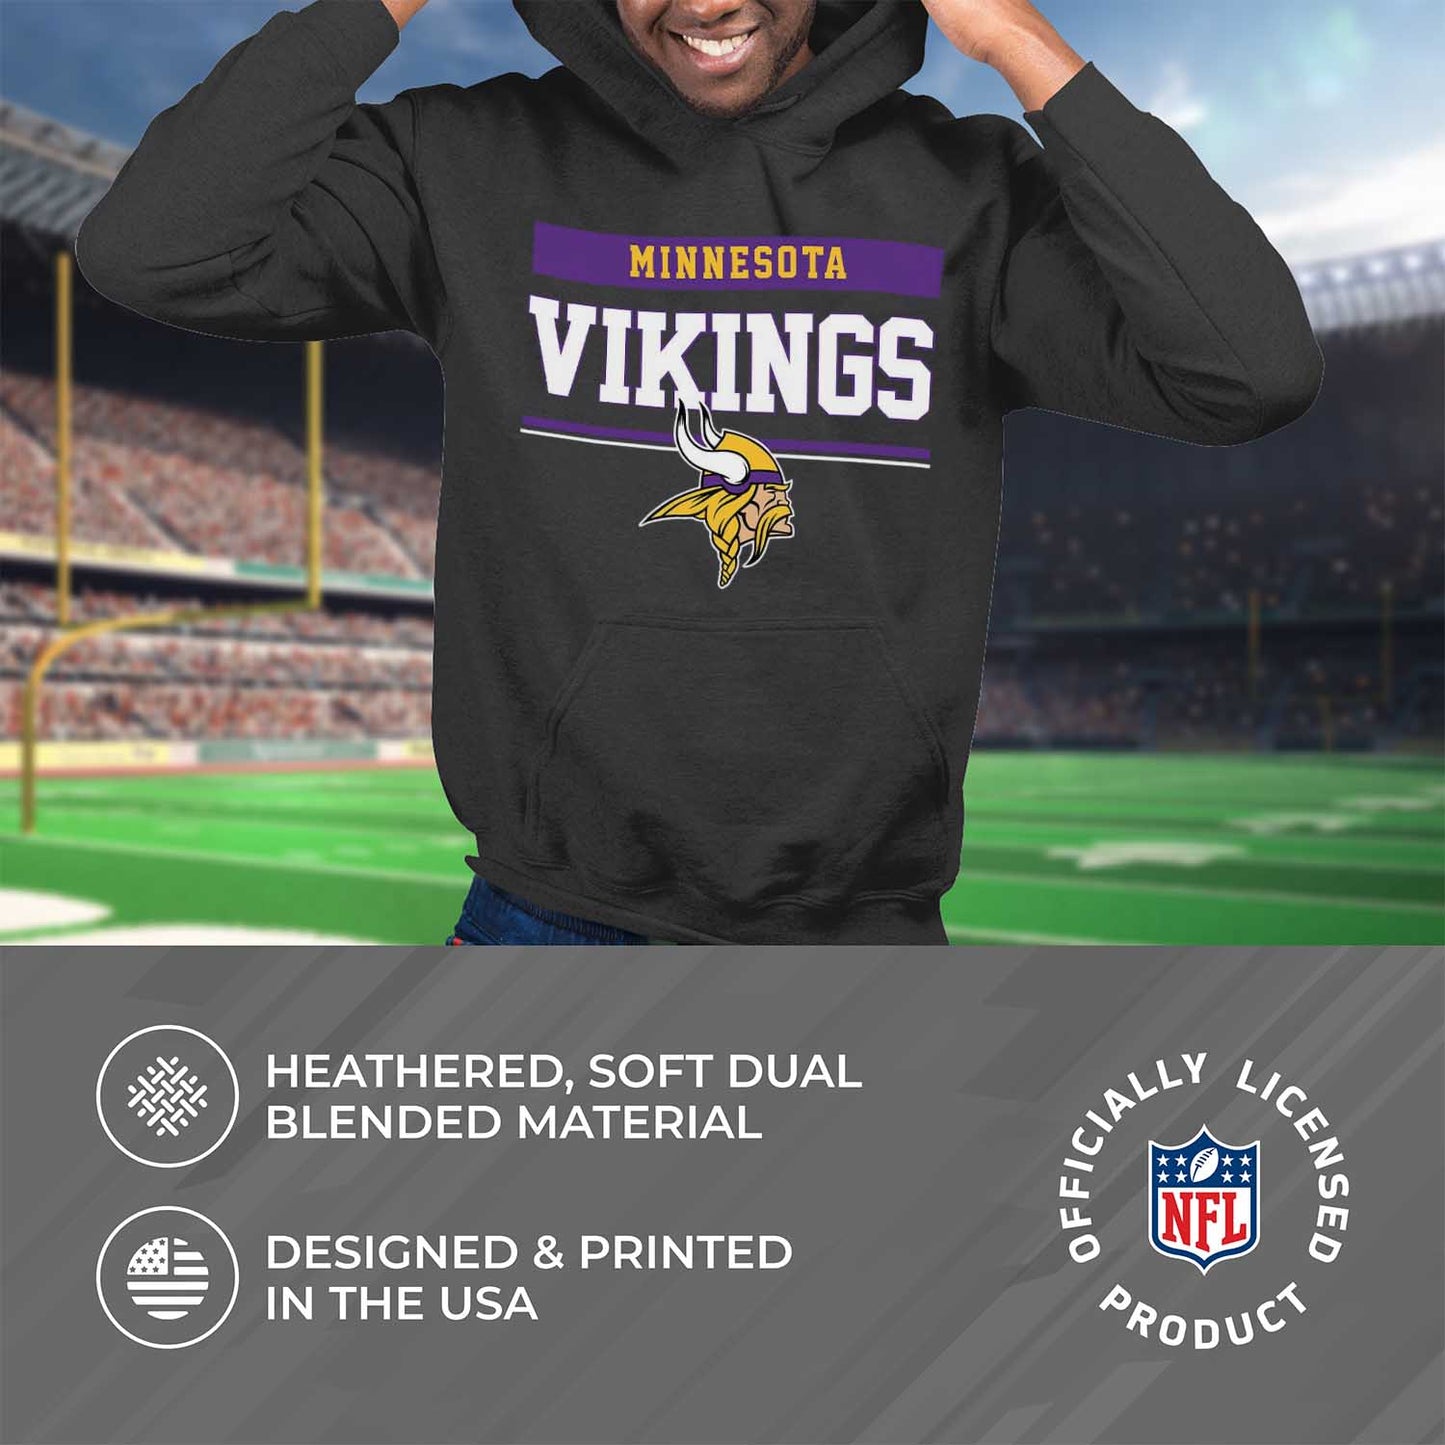 Minnesota Vikings NFL Adult Gameday Charcoal Hooded Sweatshirt - Charcoal